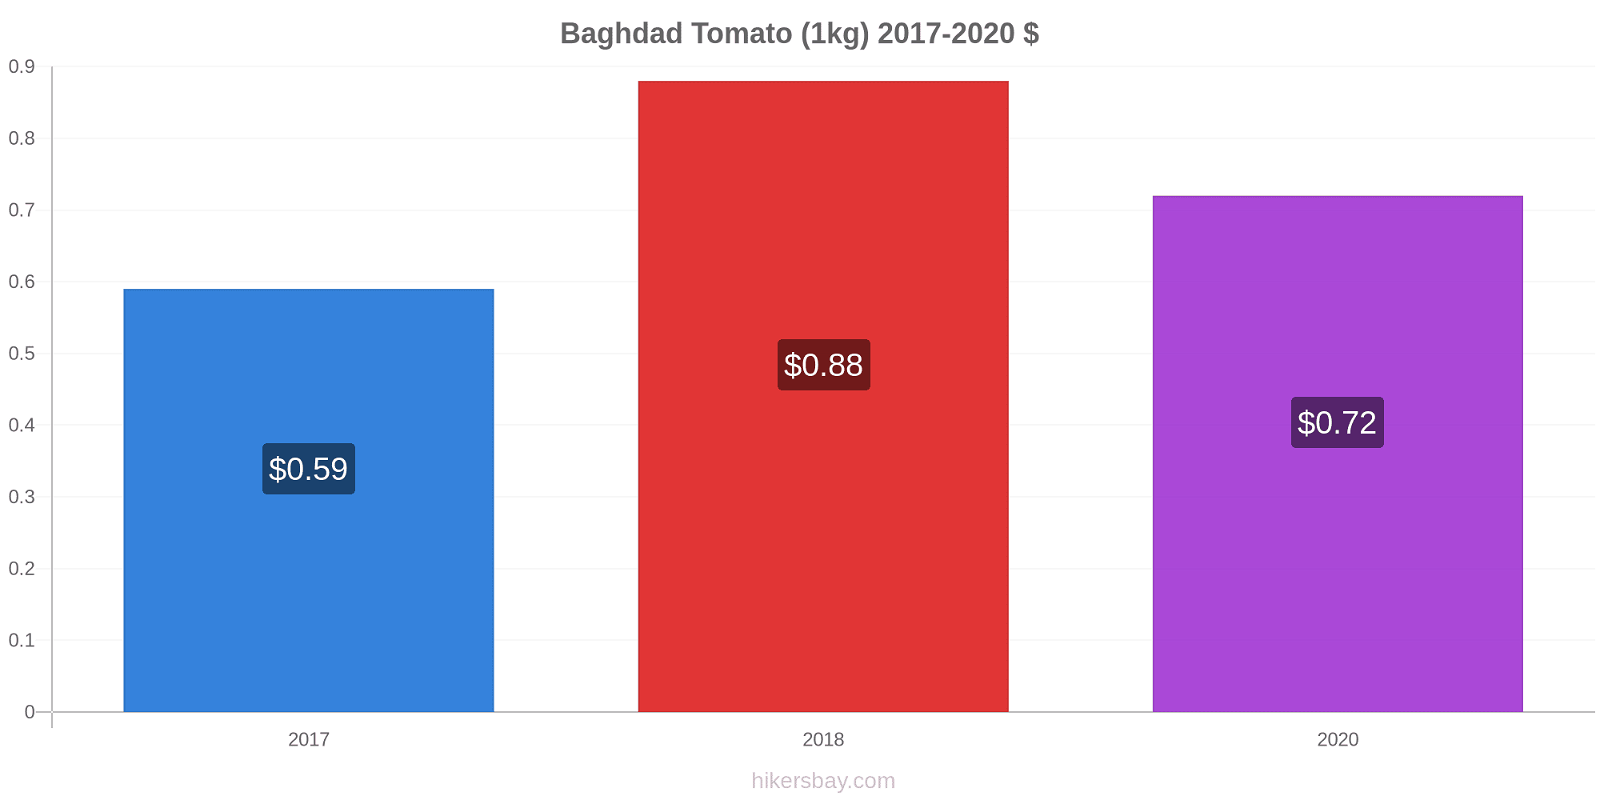 Baghdad price changes Tomato (1kg) hikersbay.com